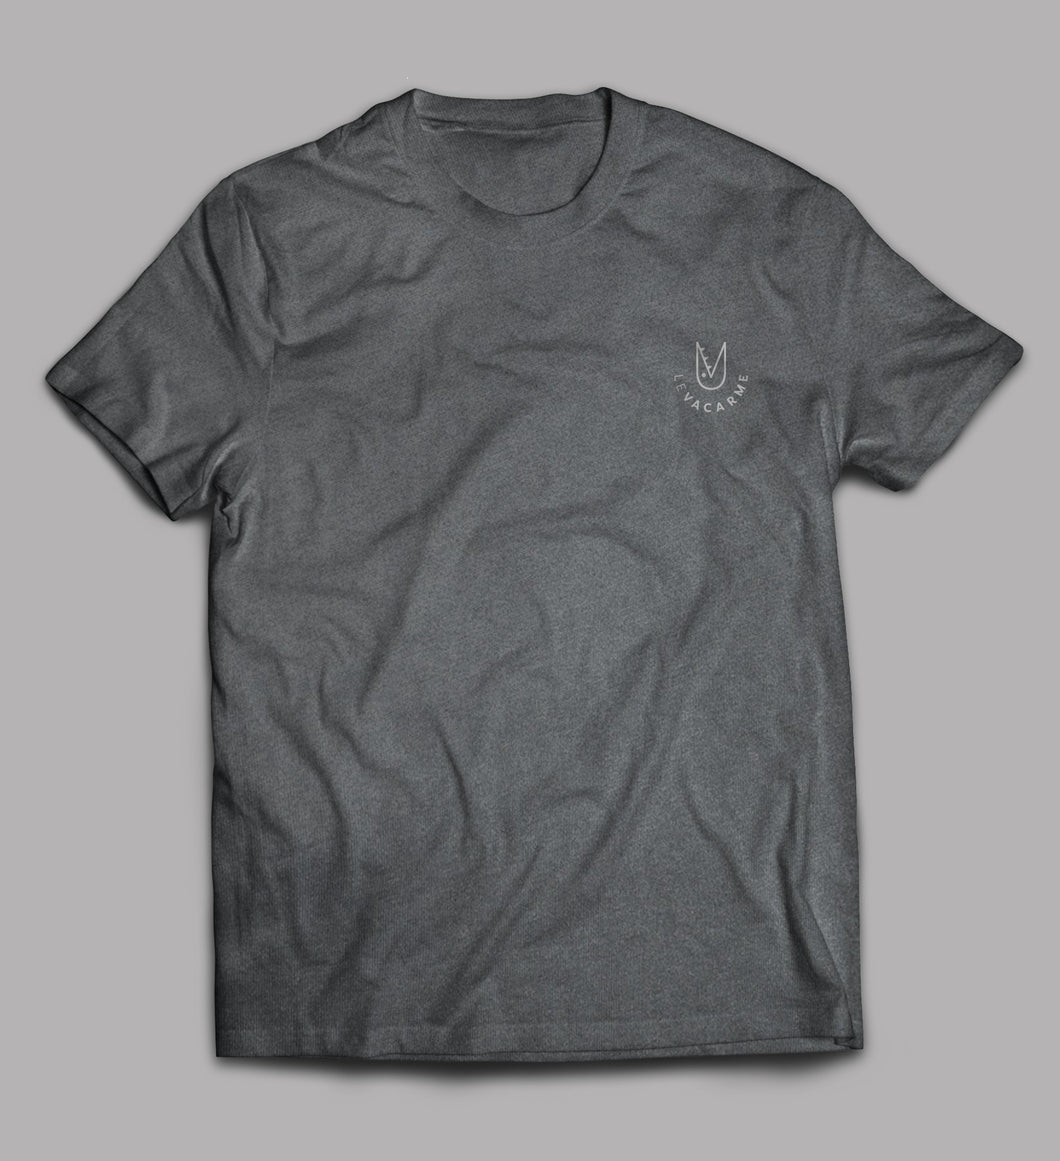 LE VACARME - Psycho Surf Staff Shirt 2020 (T-Shirt)